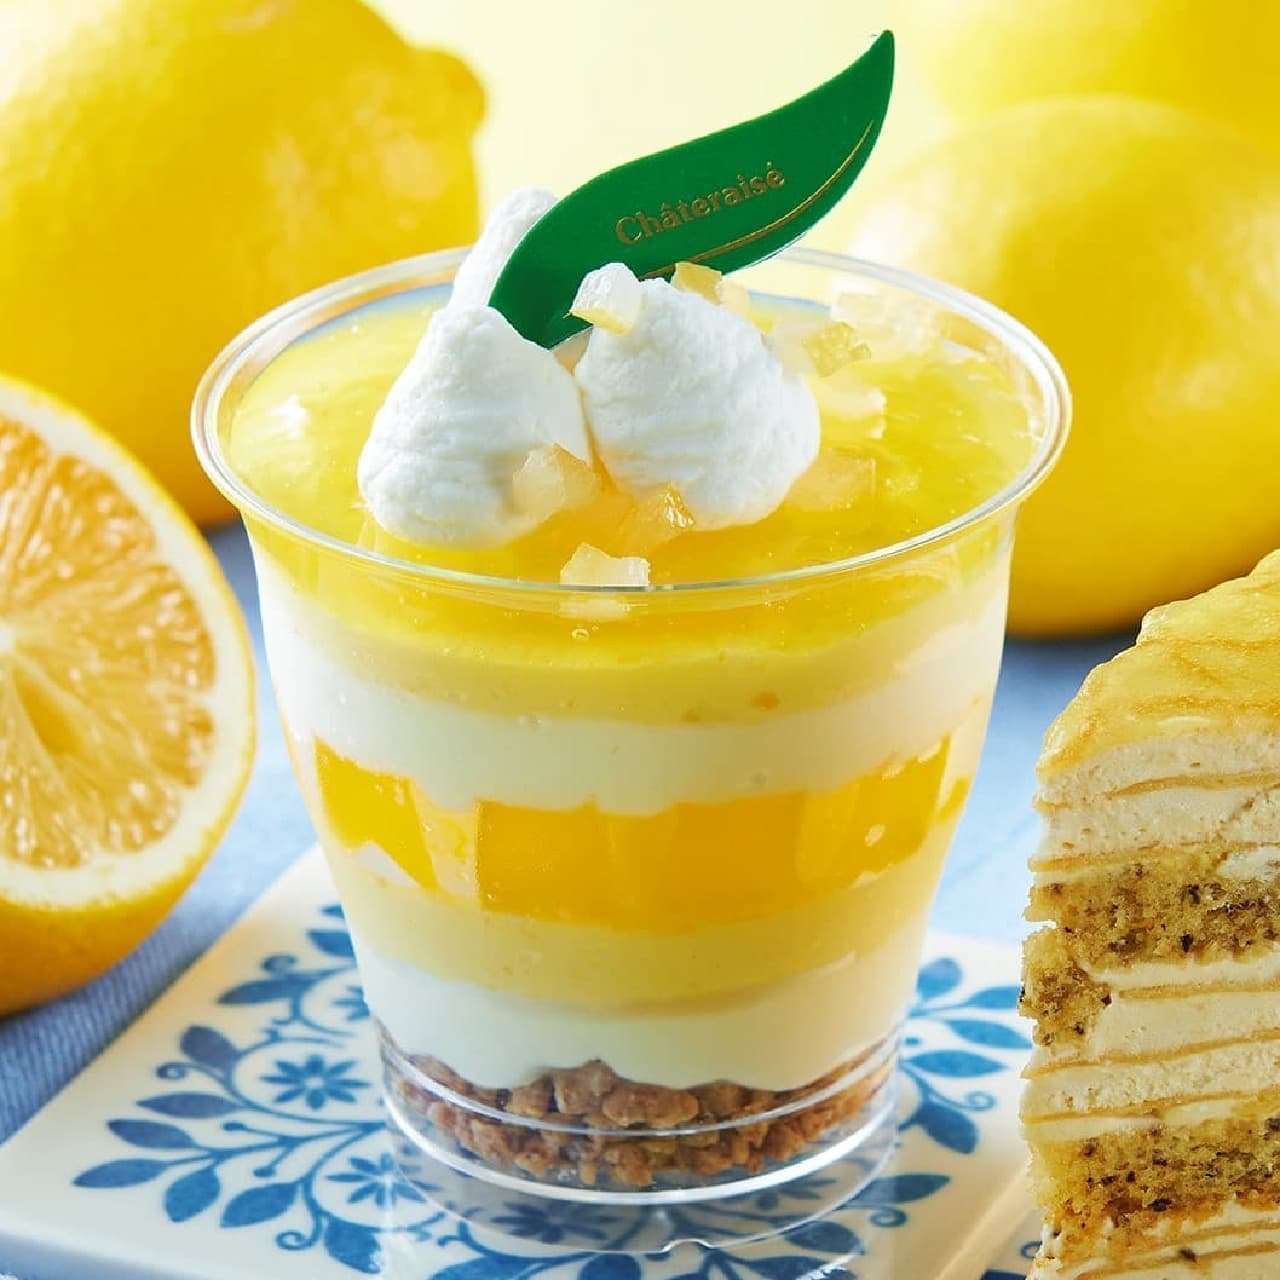 Shateraise "Setouchi Lemon Rare Cheese Cup Dessert